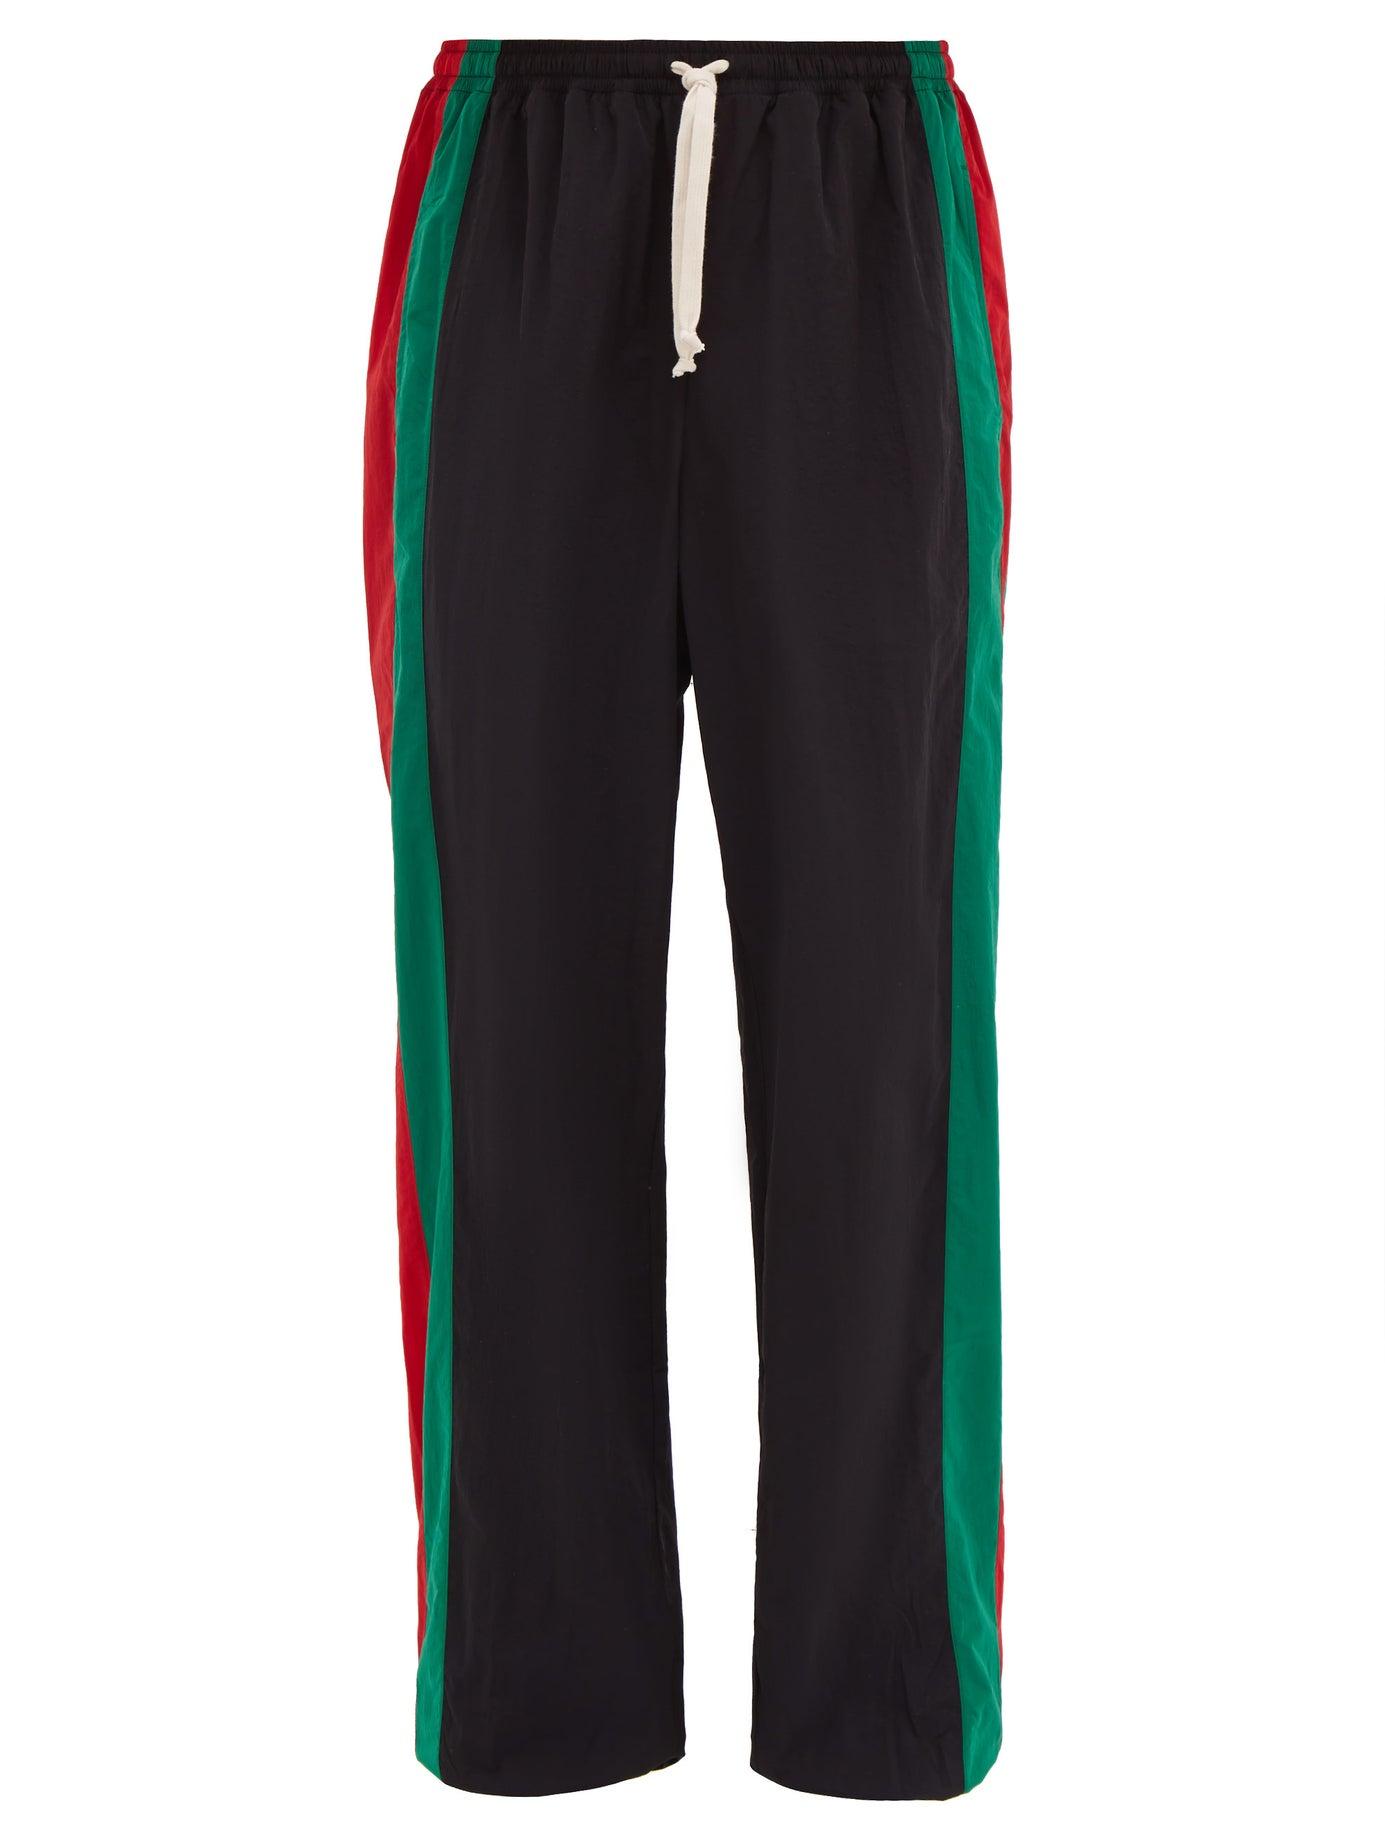 Gucci Web-stripe Cotton Track Pants in Black for Men - Lyst